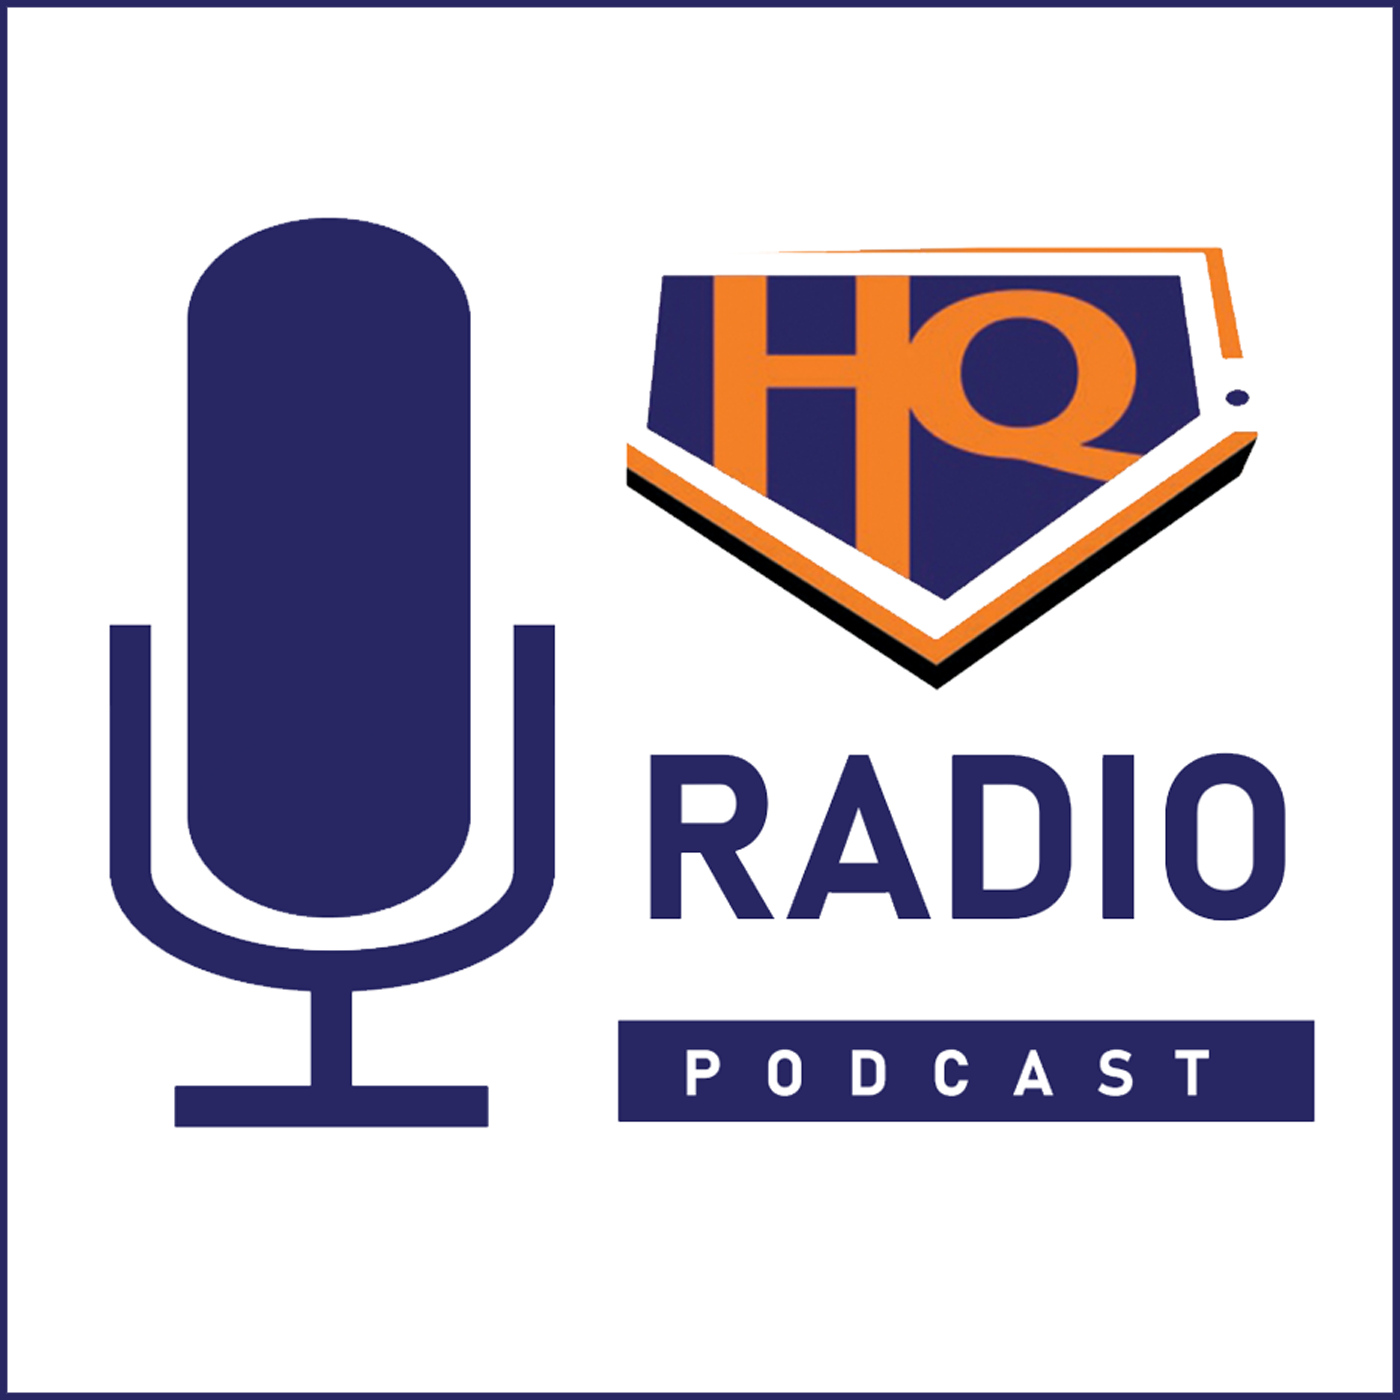 BaseballHQ Radio, February 23, 2022